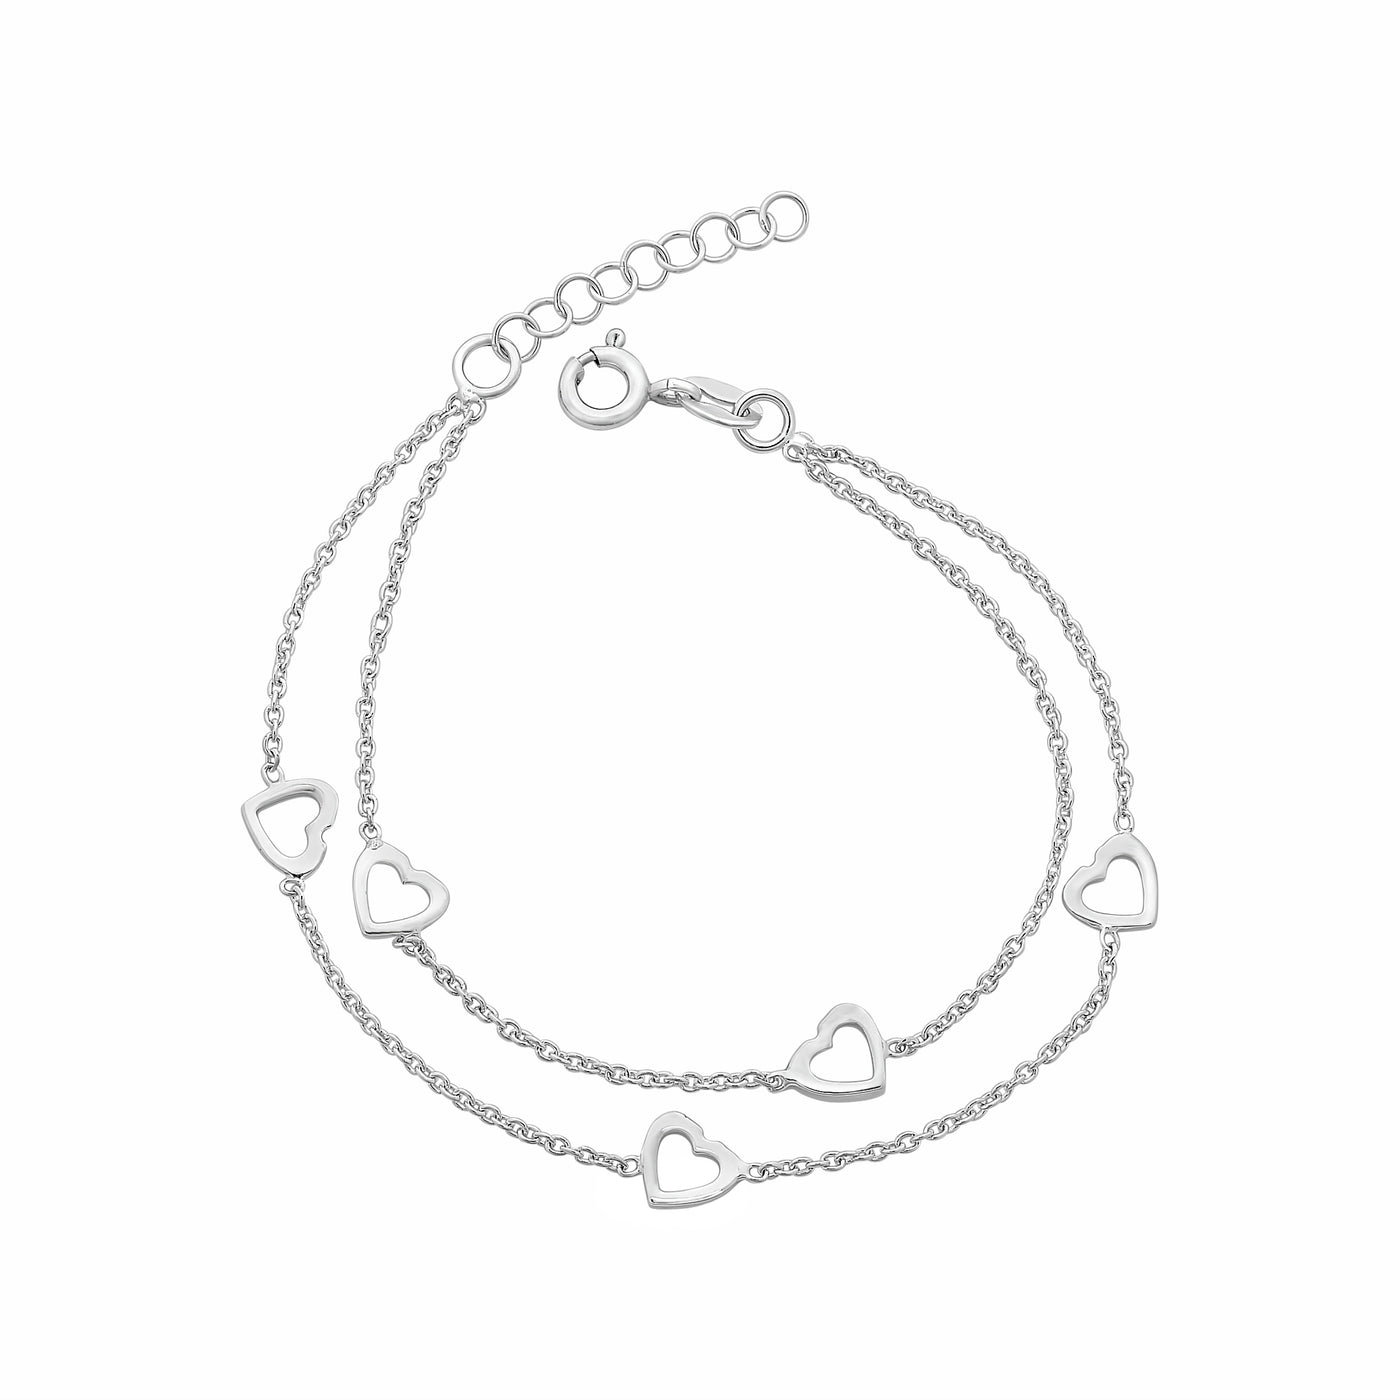 SterlingSilver Double Strand Bracelet with Open Hearts.